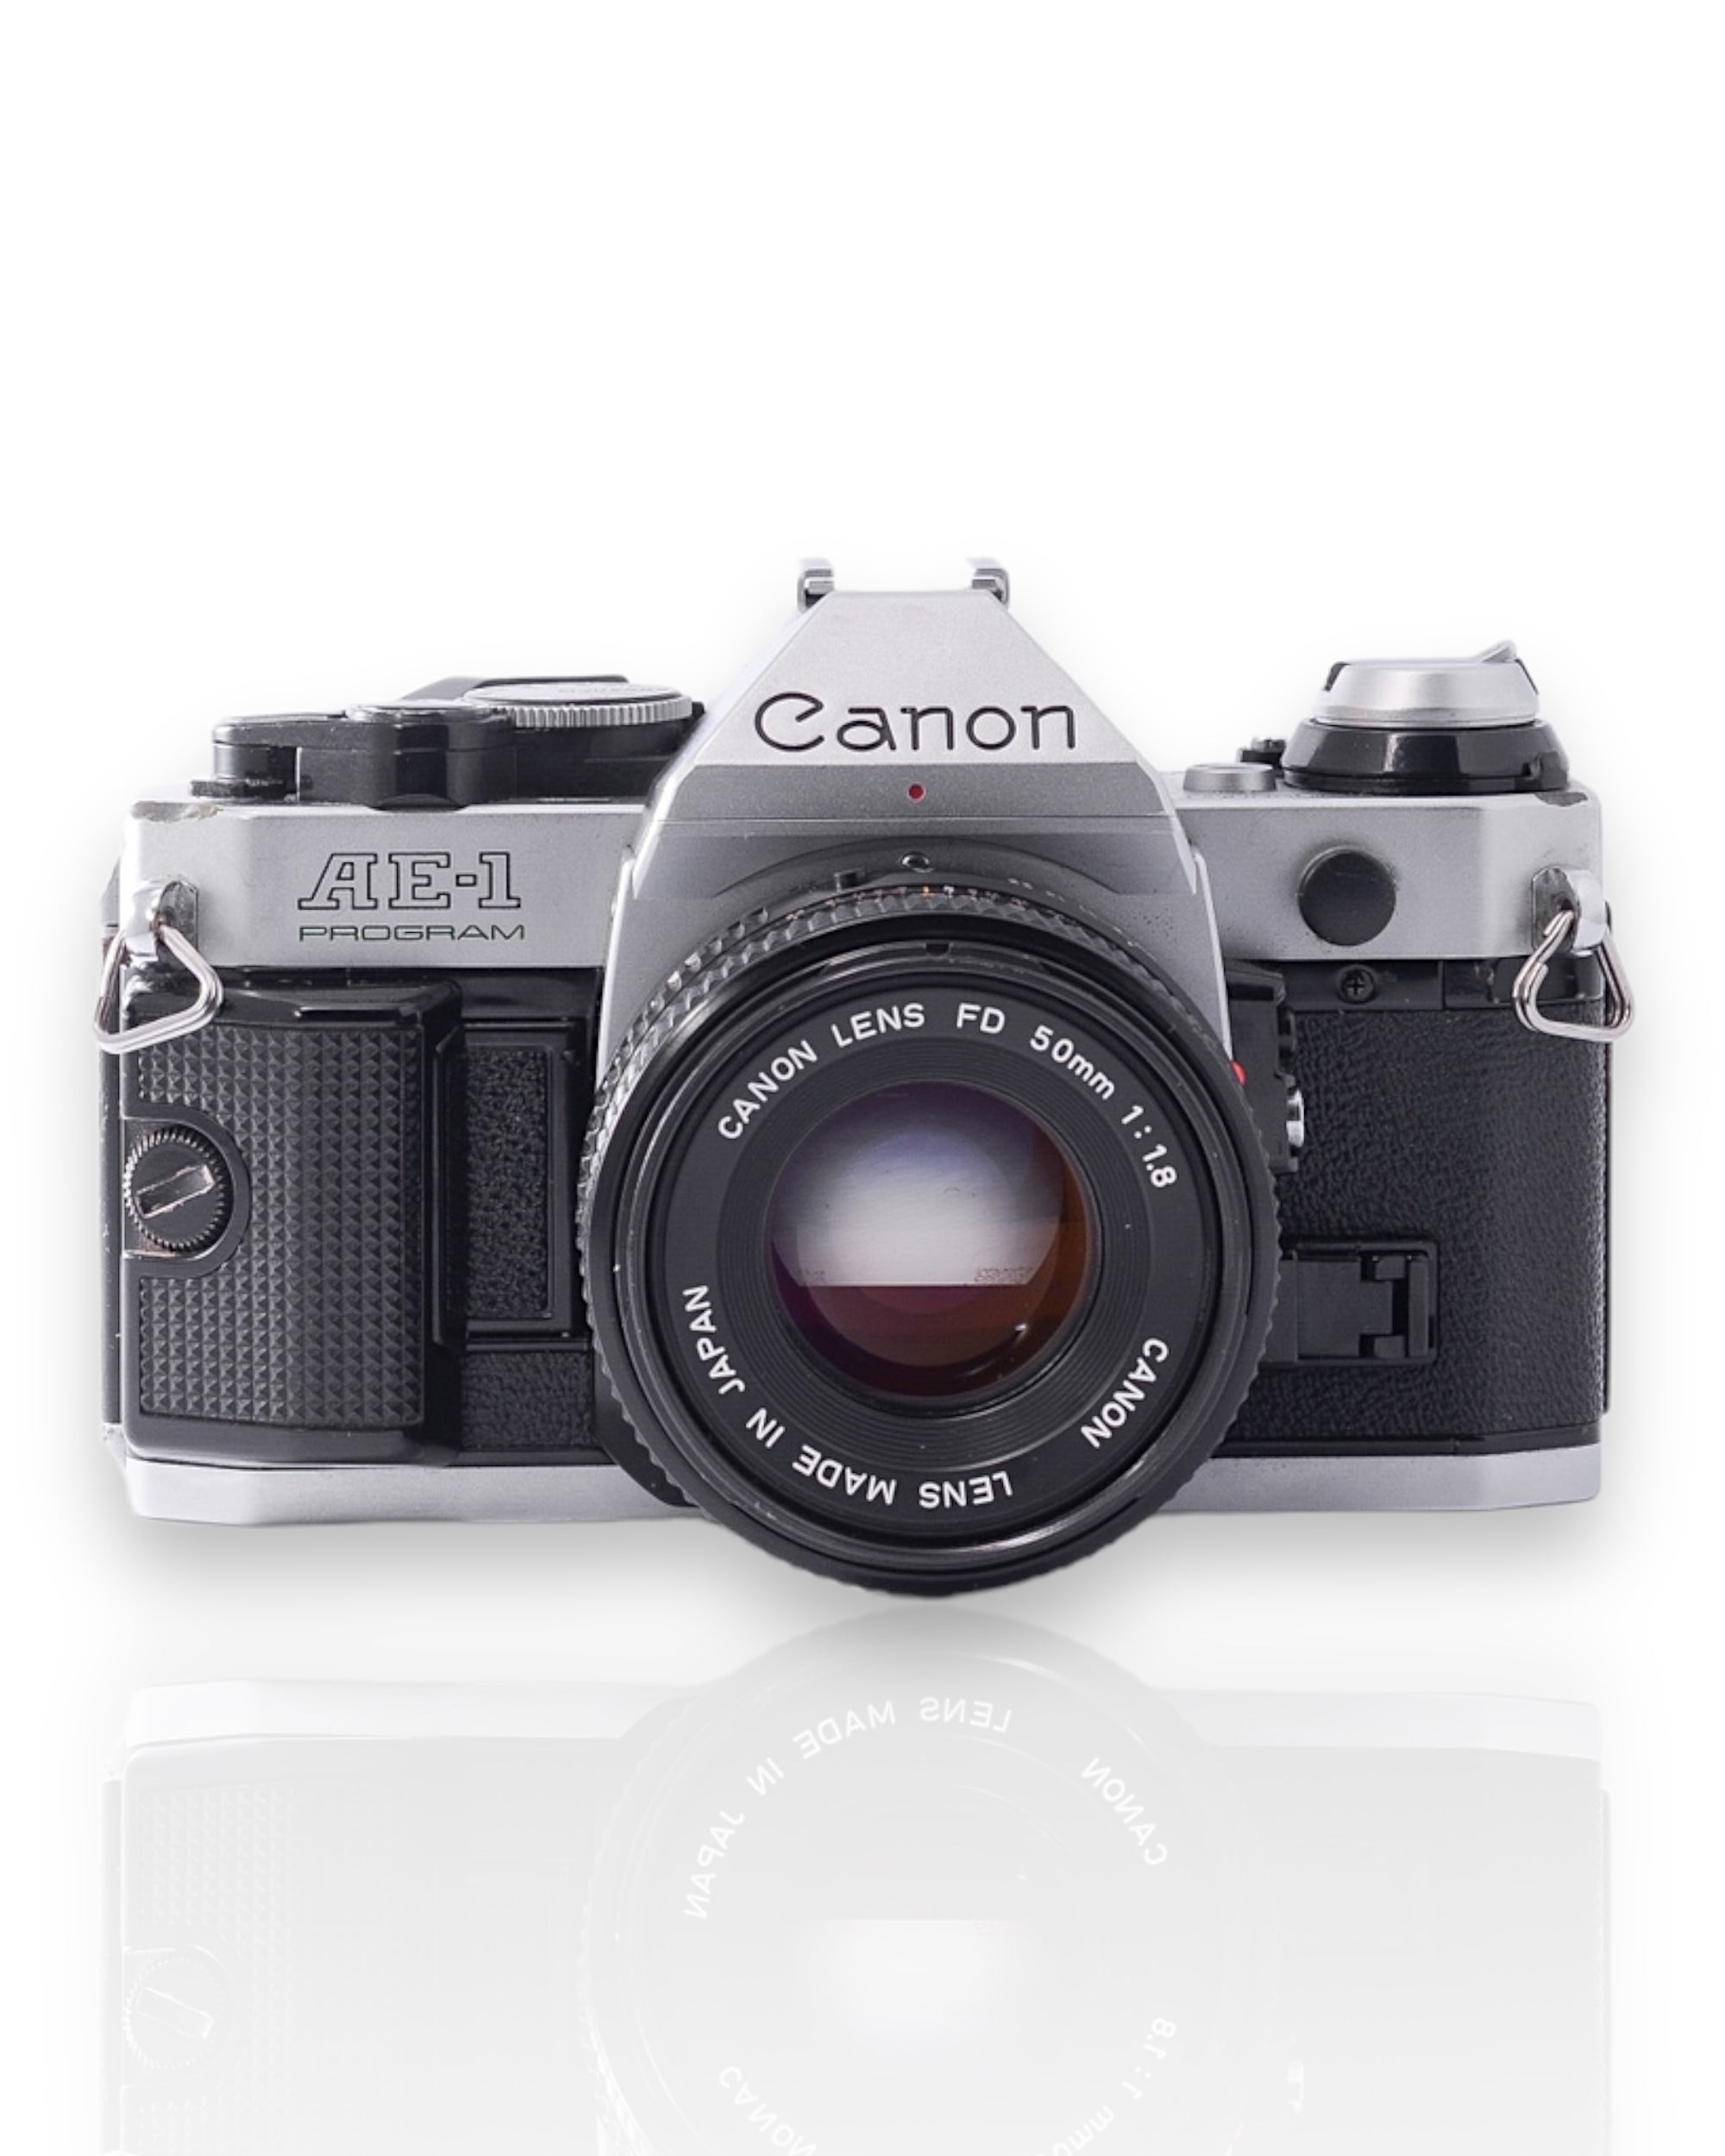 Canon AE-1 Program 35mm SLR film camera with 50mm f1.8 lens